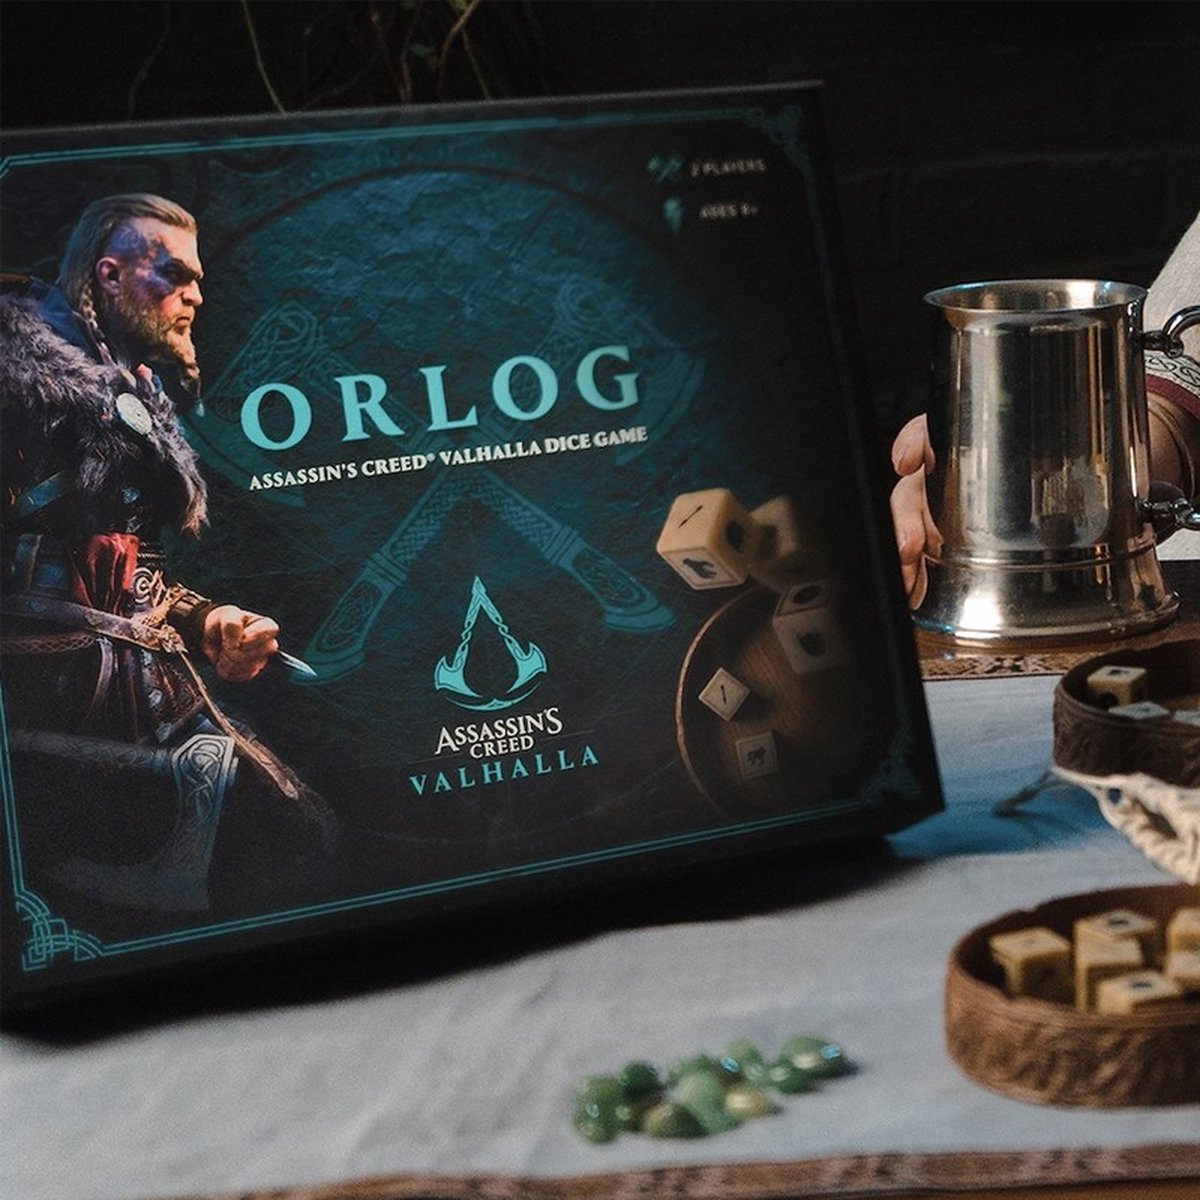 Assassin's creed: Valhalla Orlog Dice Game - Dobbelspel (ENG)